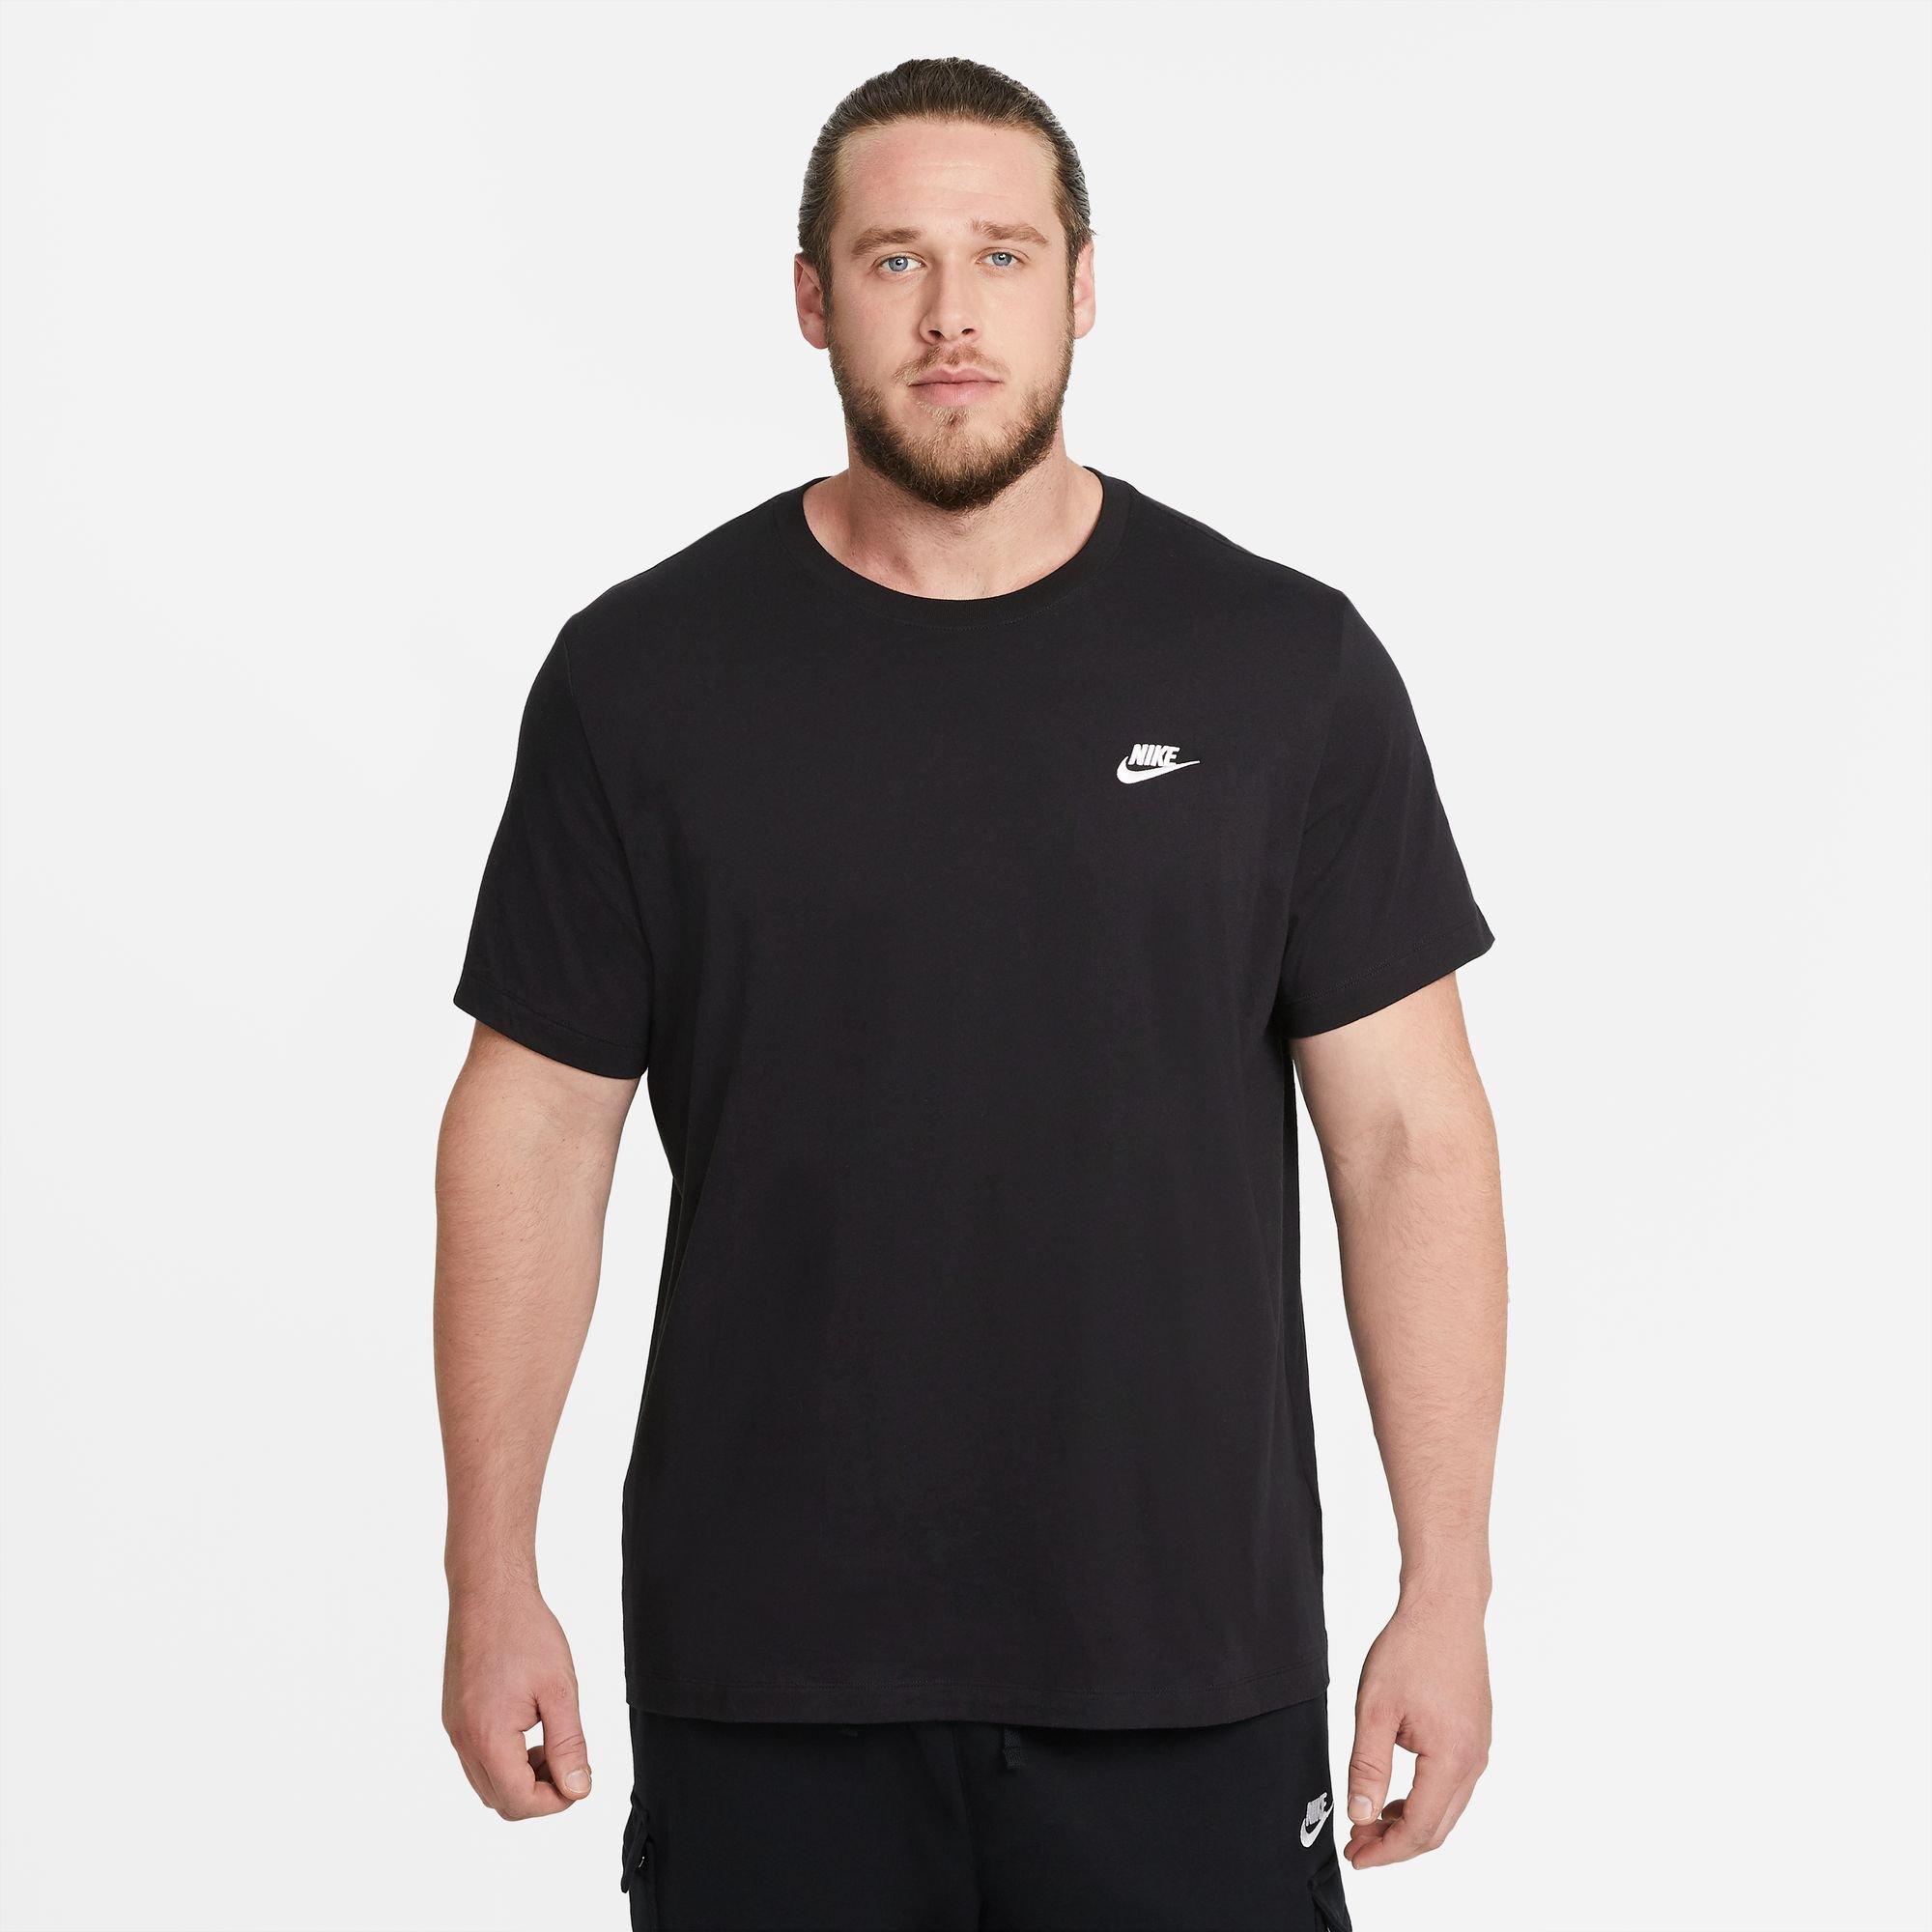 Nike sports shirt size L - New, Tops